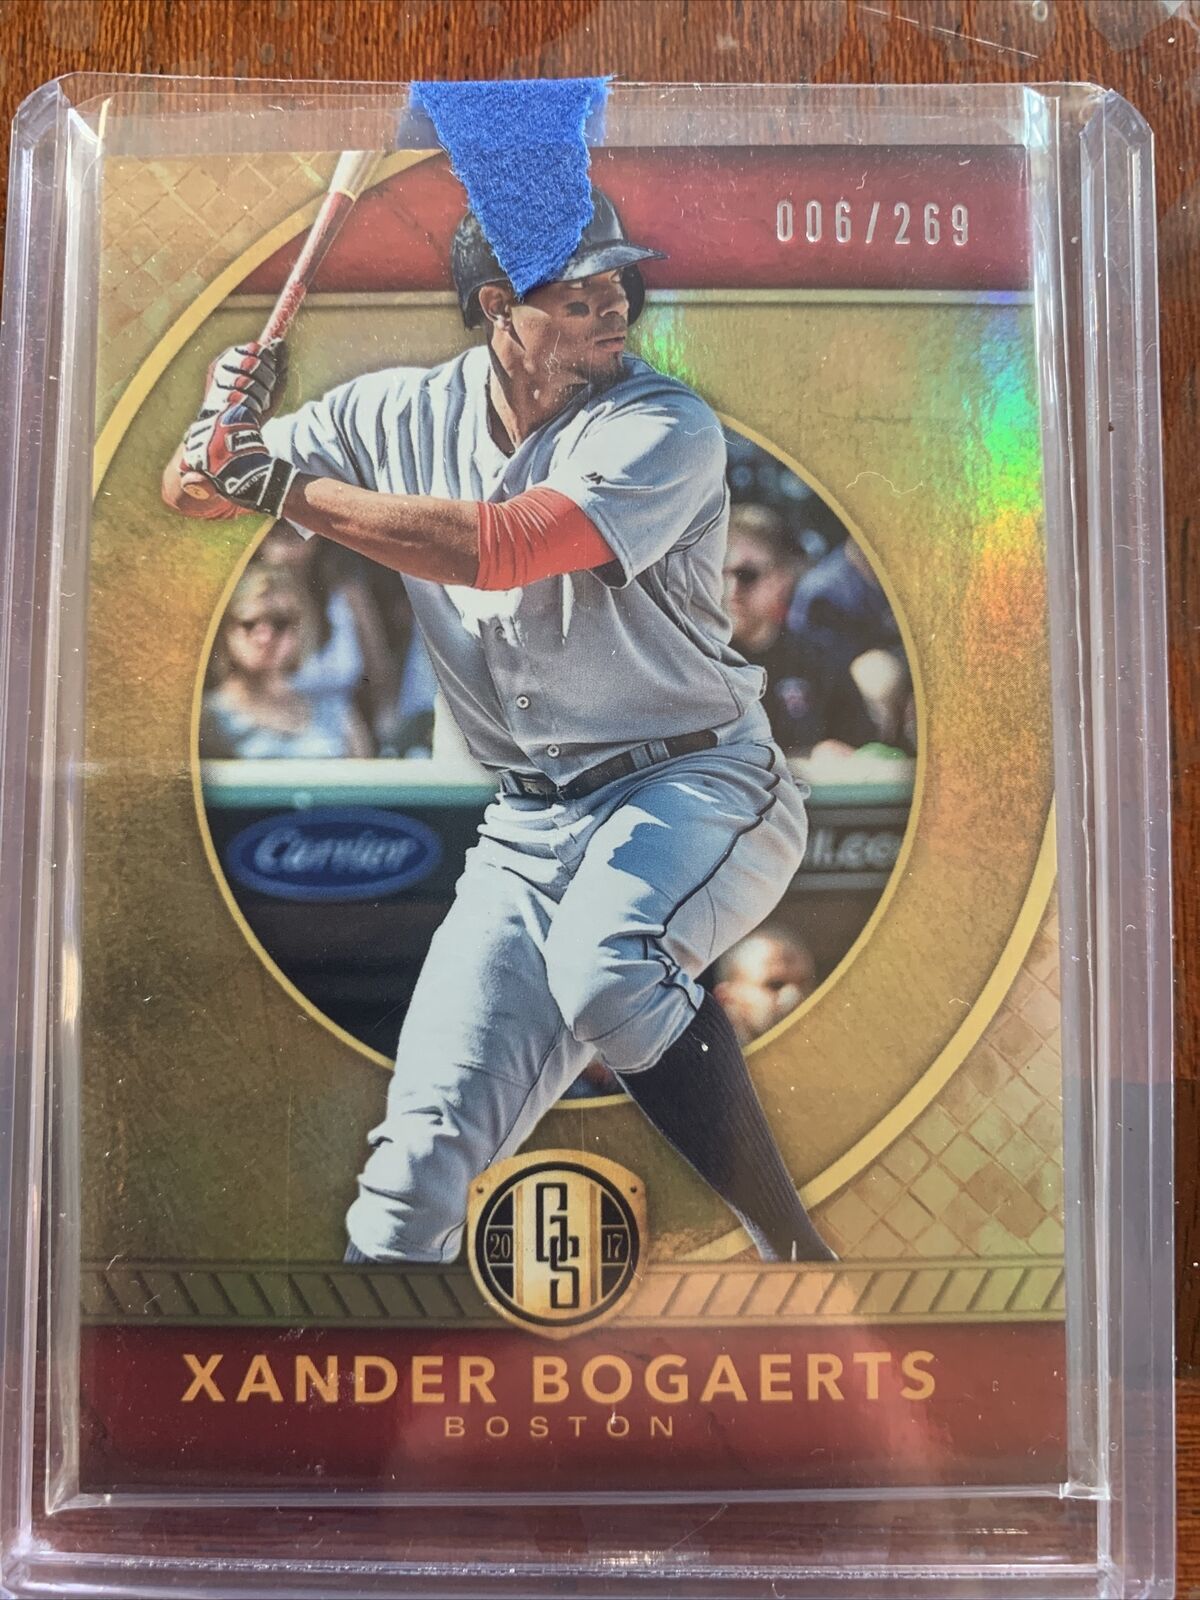 Primary image for Xander Bogaerts 2017 Panini Chronicles Gold Standard Baseball Card  6/269 #19